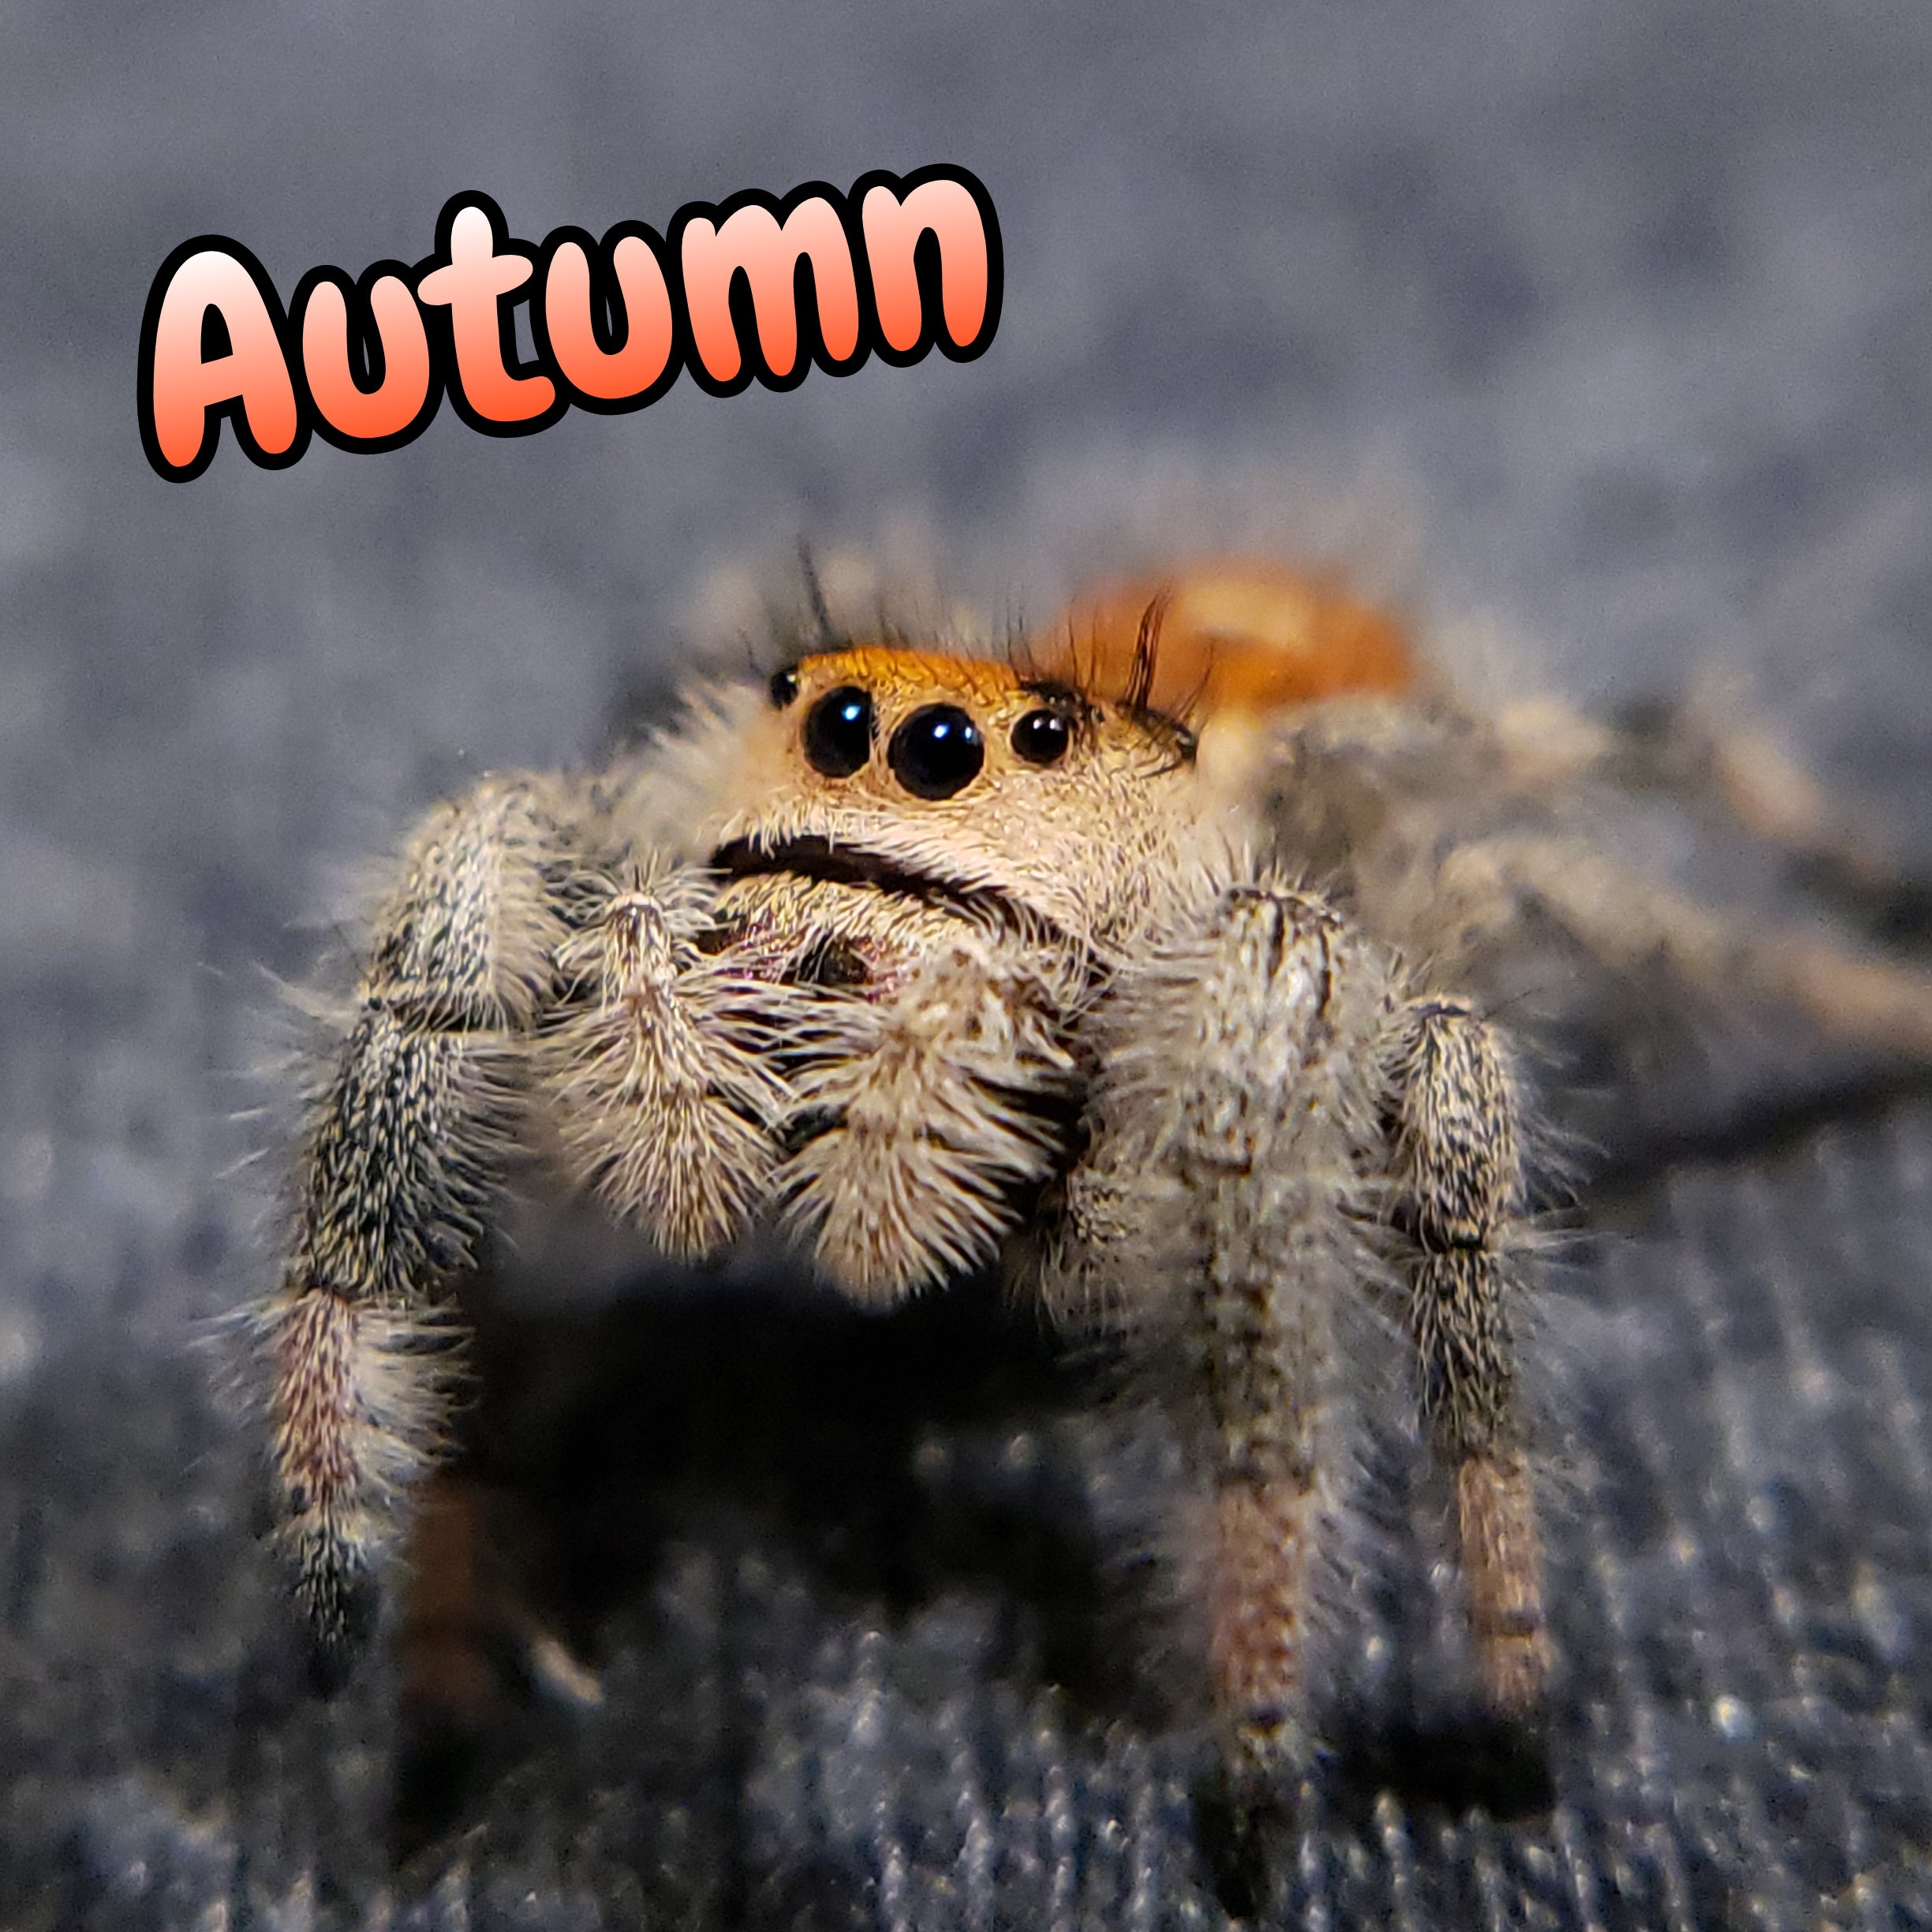 Regal Jumping Spider "Autumn"